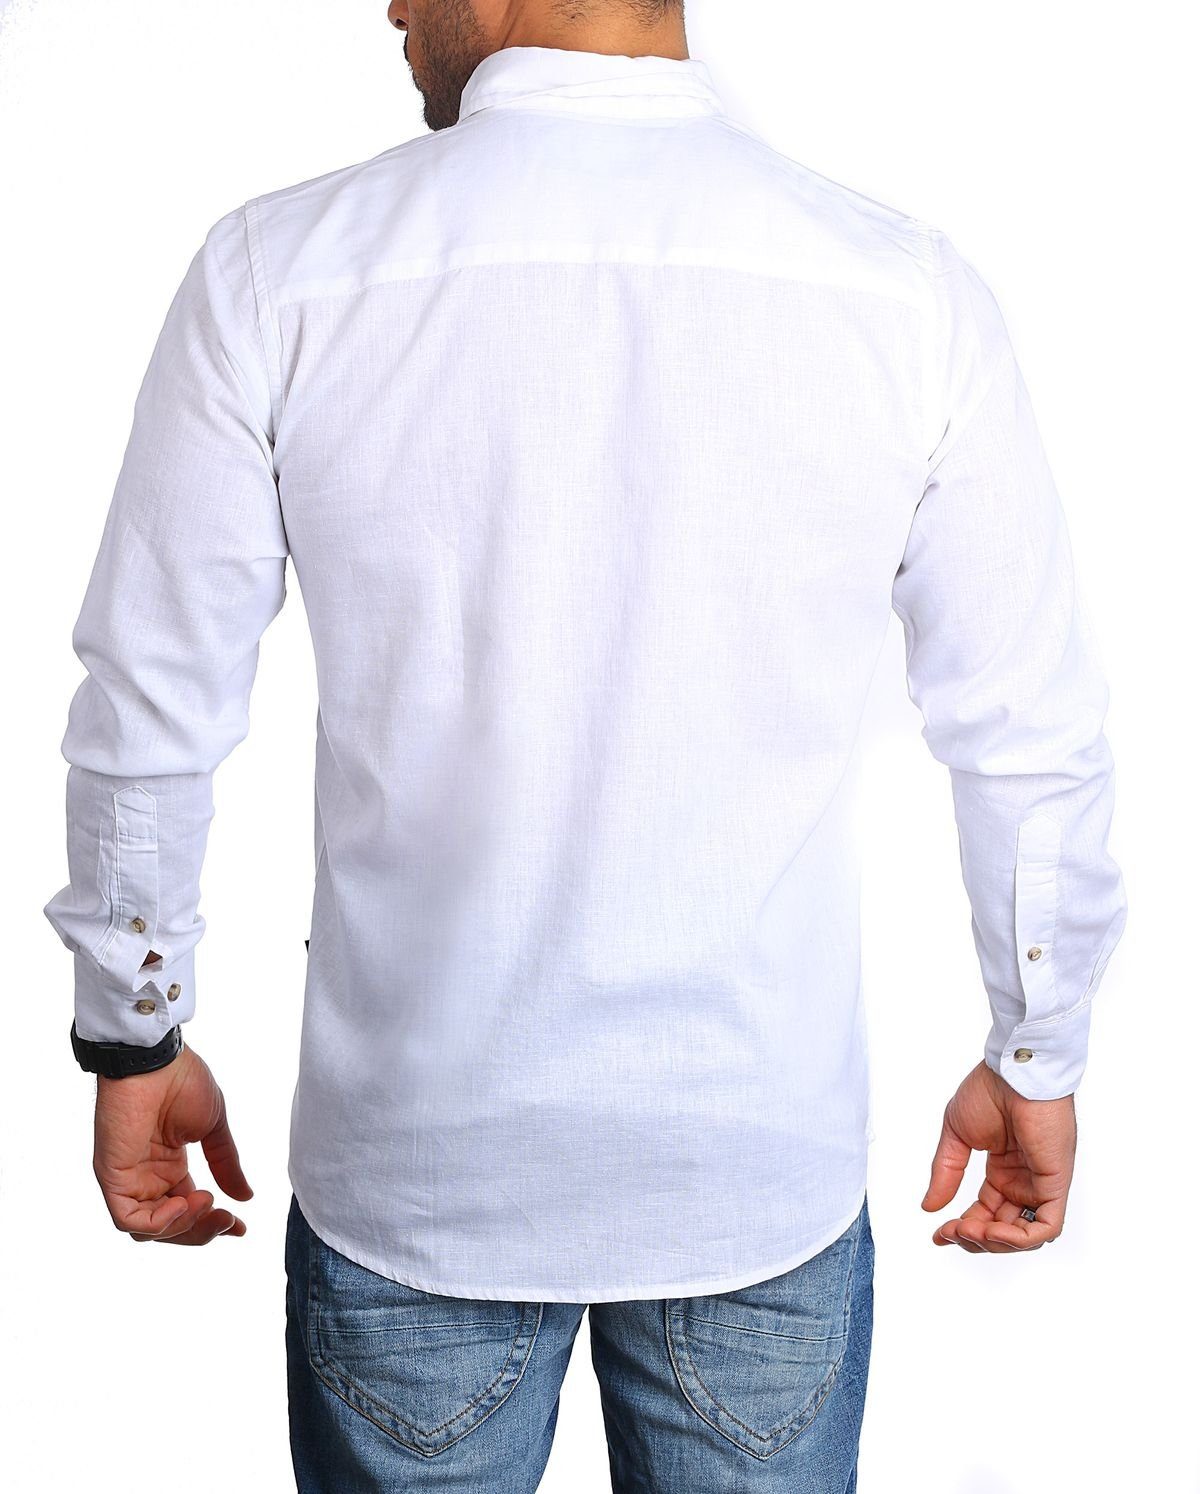 CARISMA Langarmhemd Herren Leinen Baumwoll Button-Down-Kragen Hemd Langarm Uni Regular 8529 Weiß Mix Casual